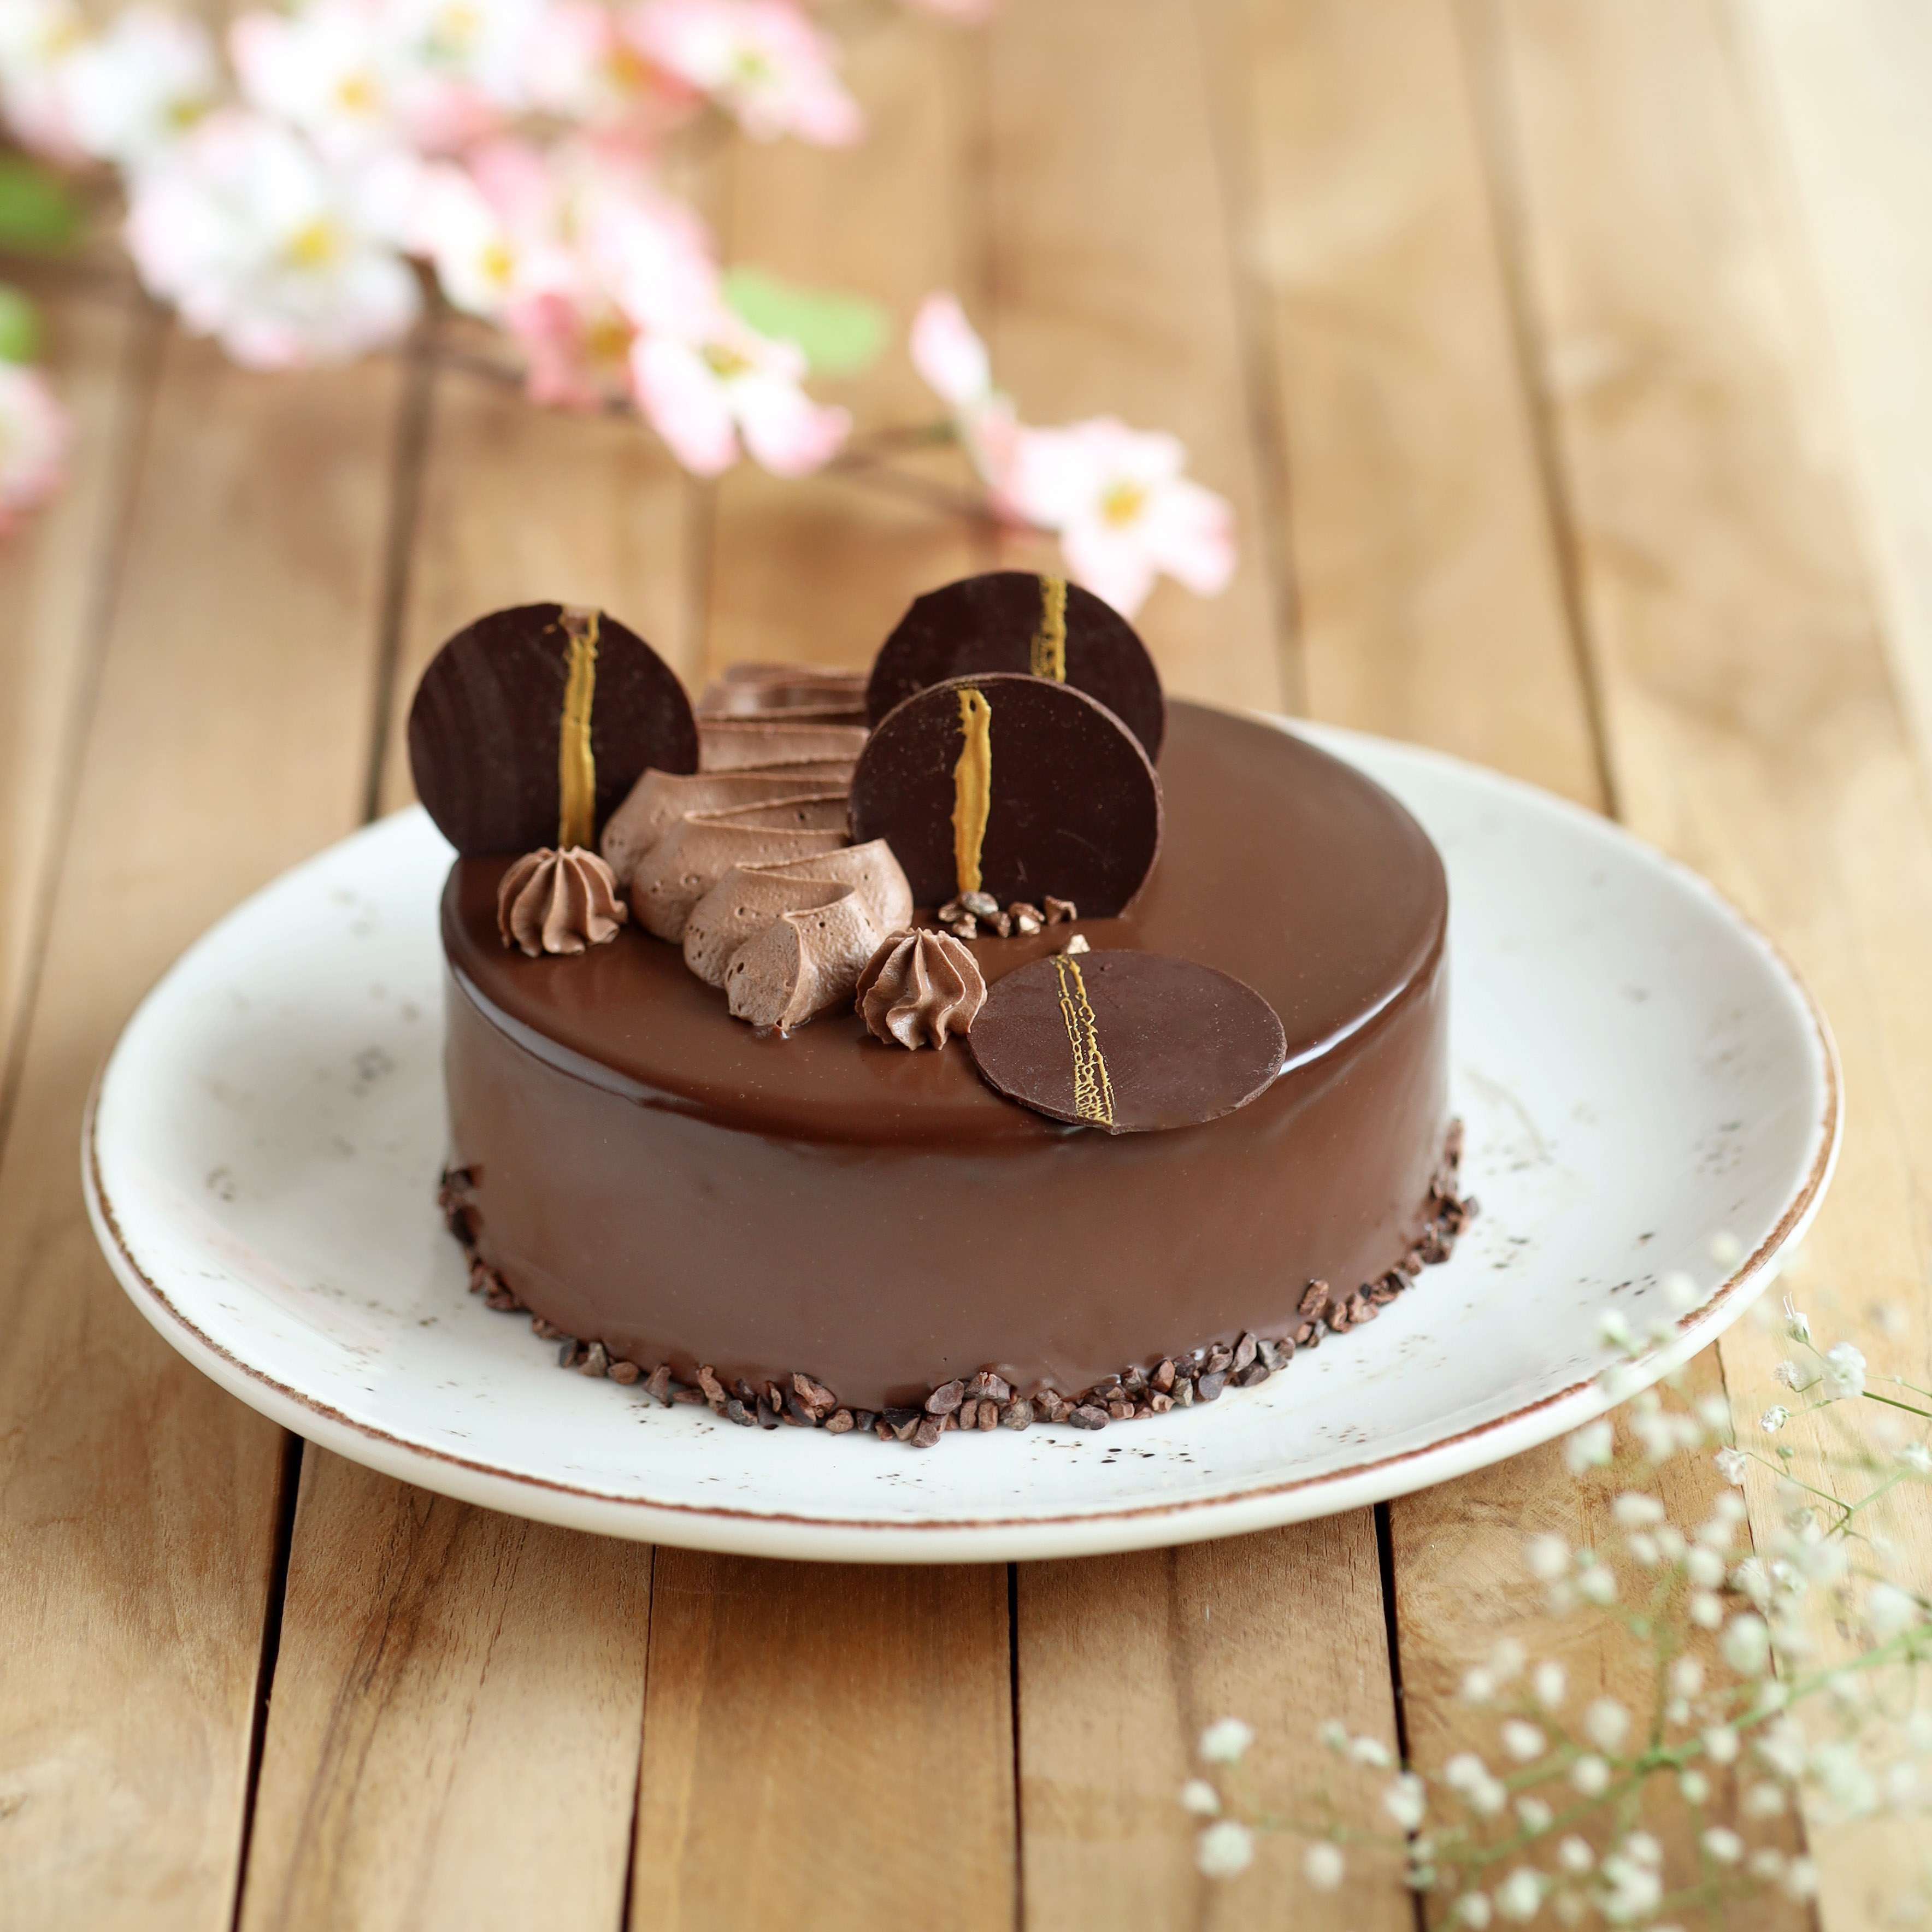 The Best Chocolate Cakes in Singapore | Vanilla Luxury